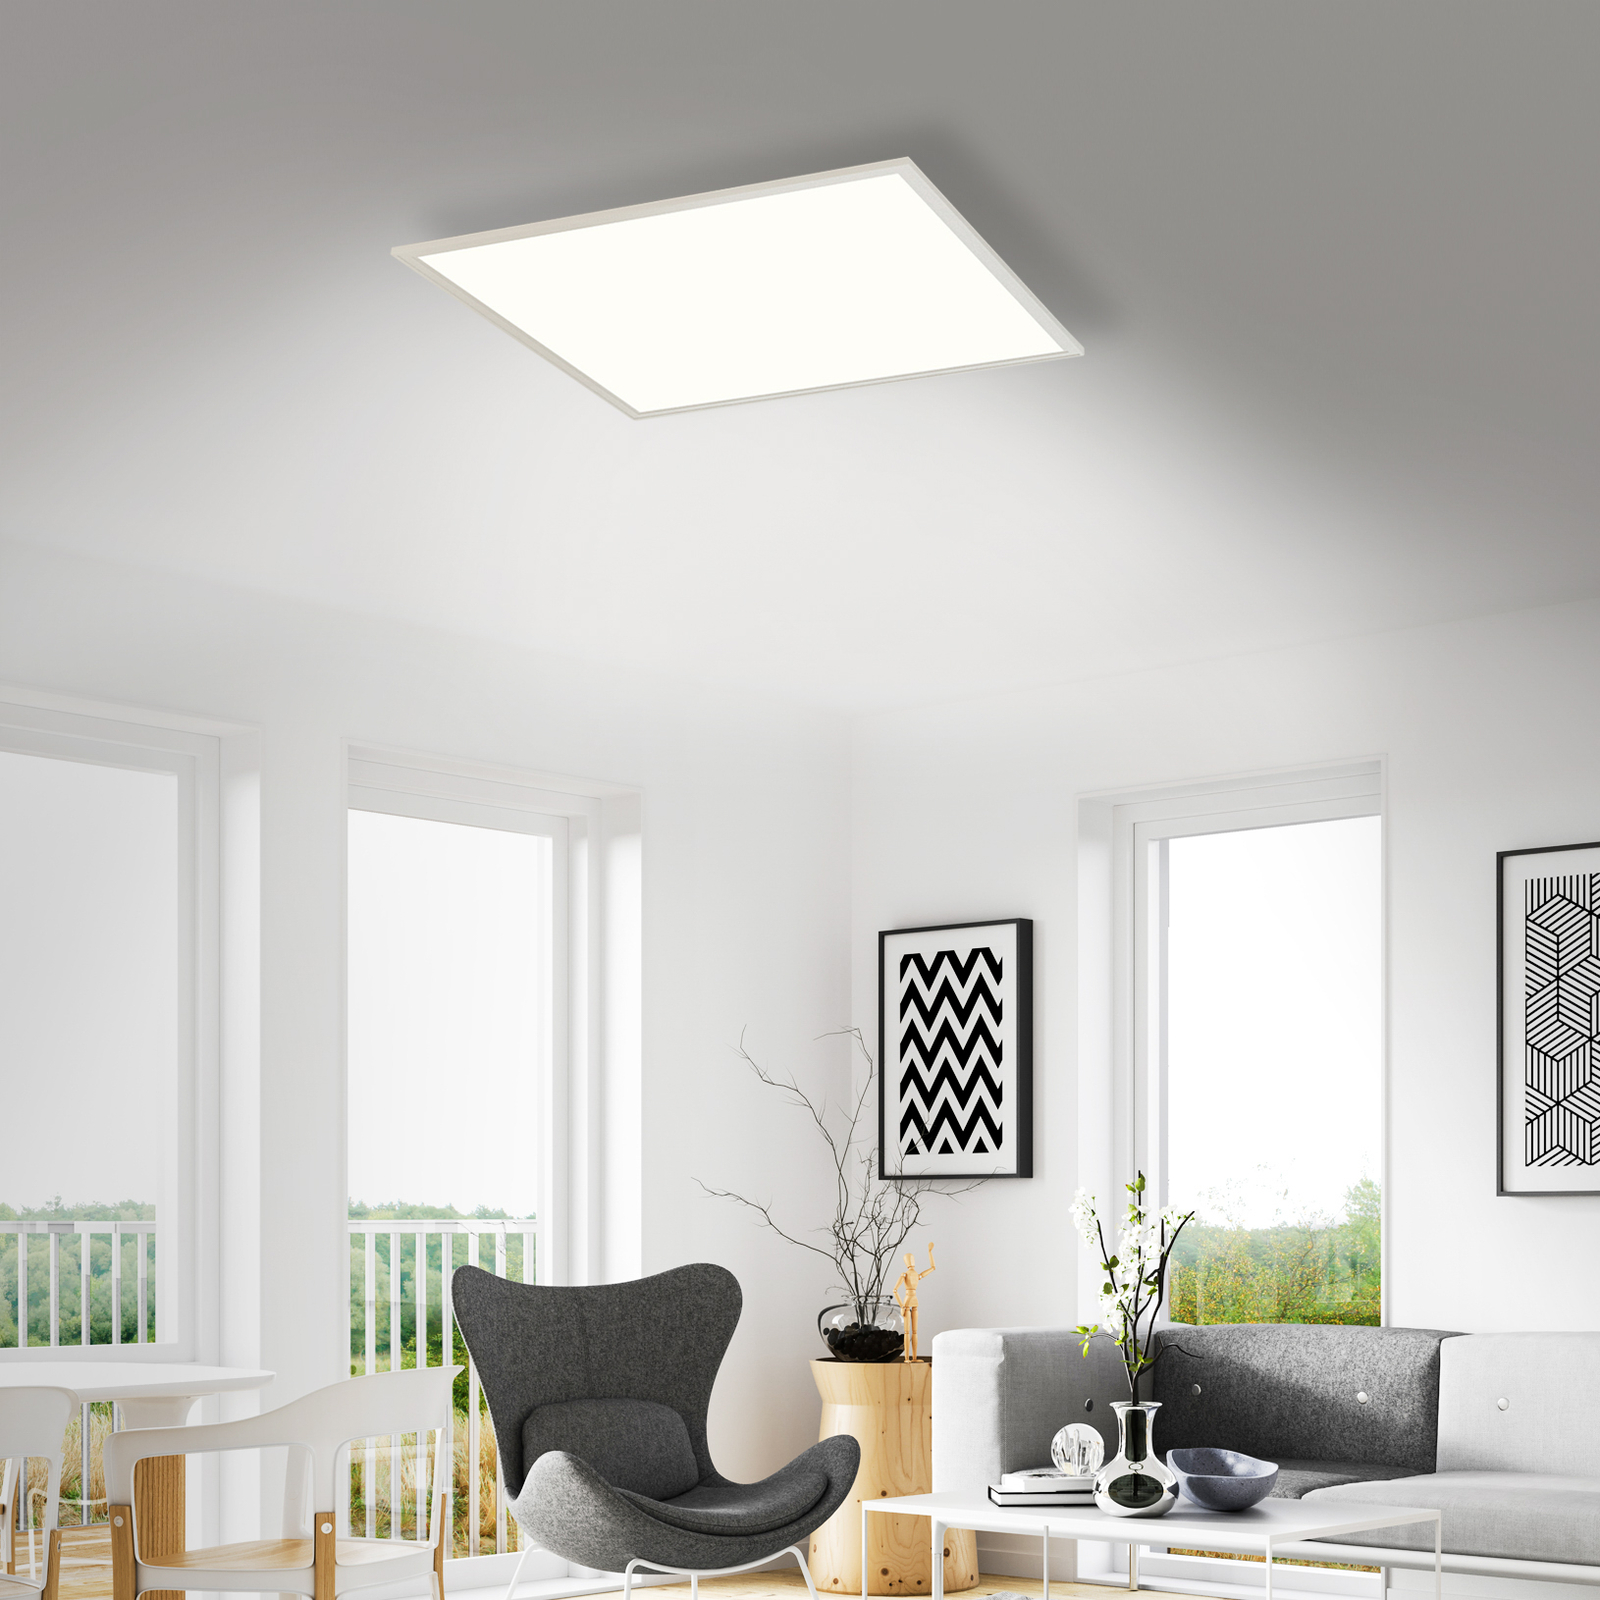 Panel LED Simple blanco, ultra plano, 59,5x59,5 cm